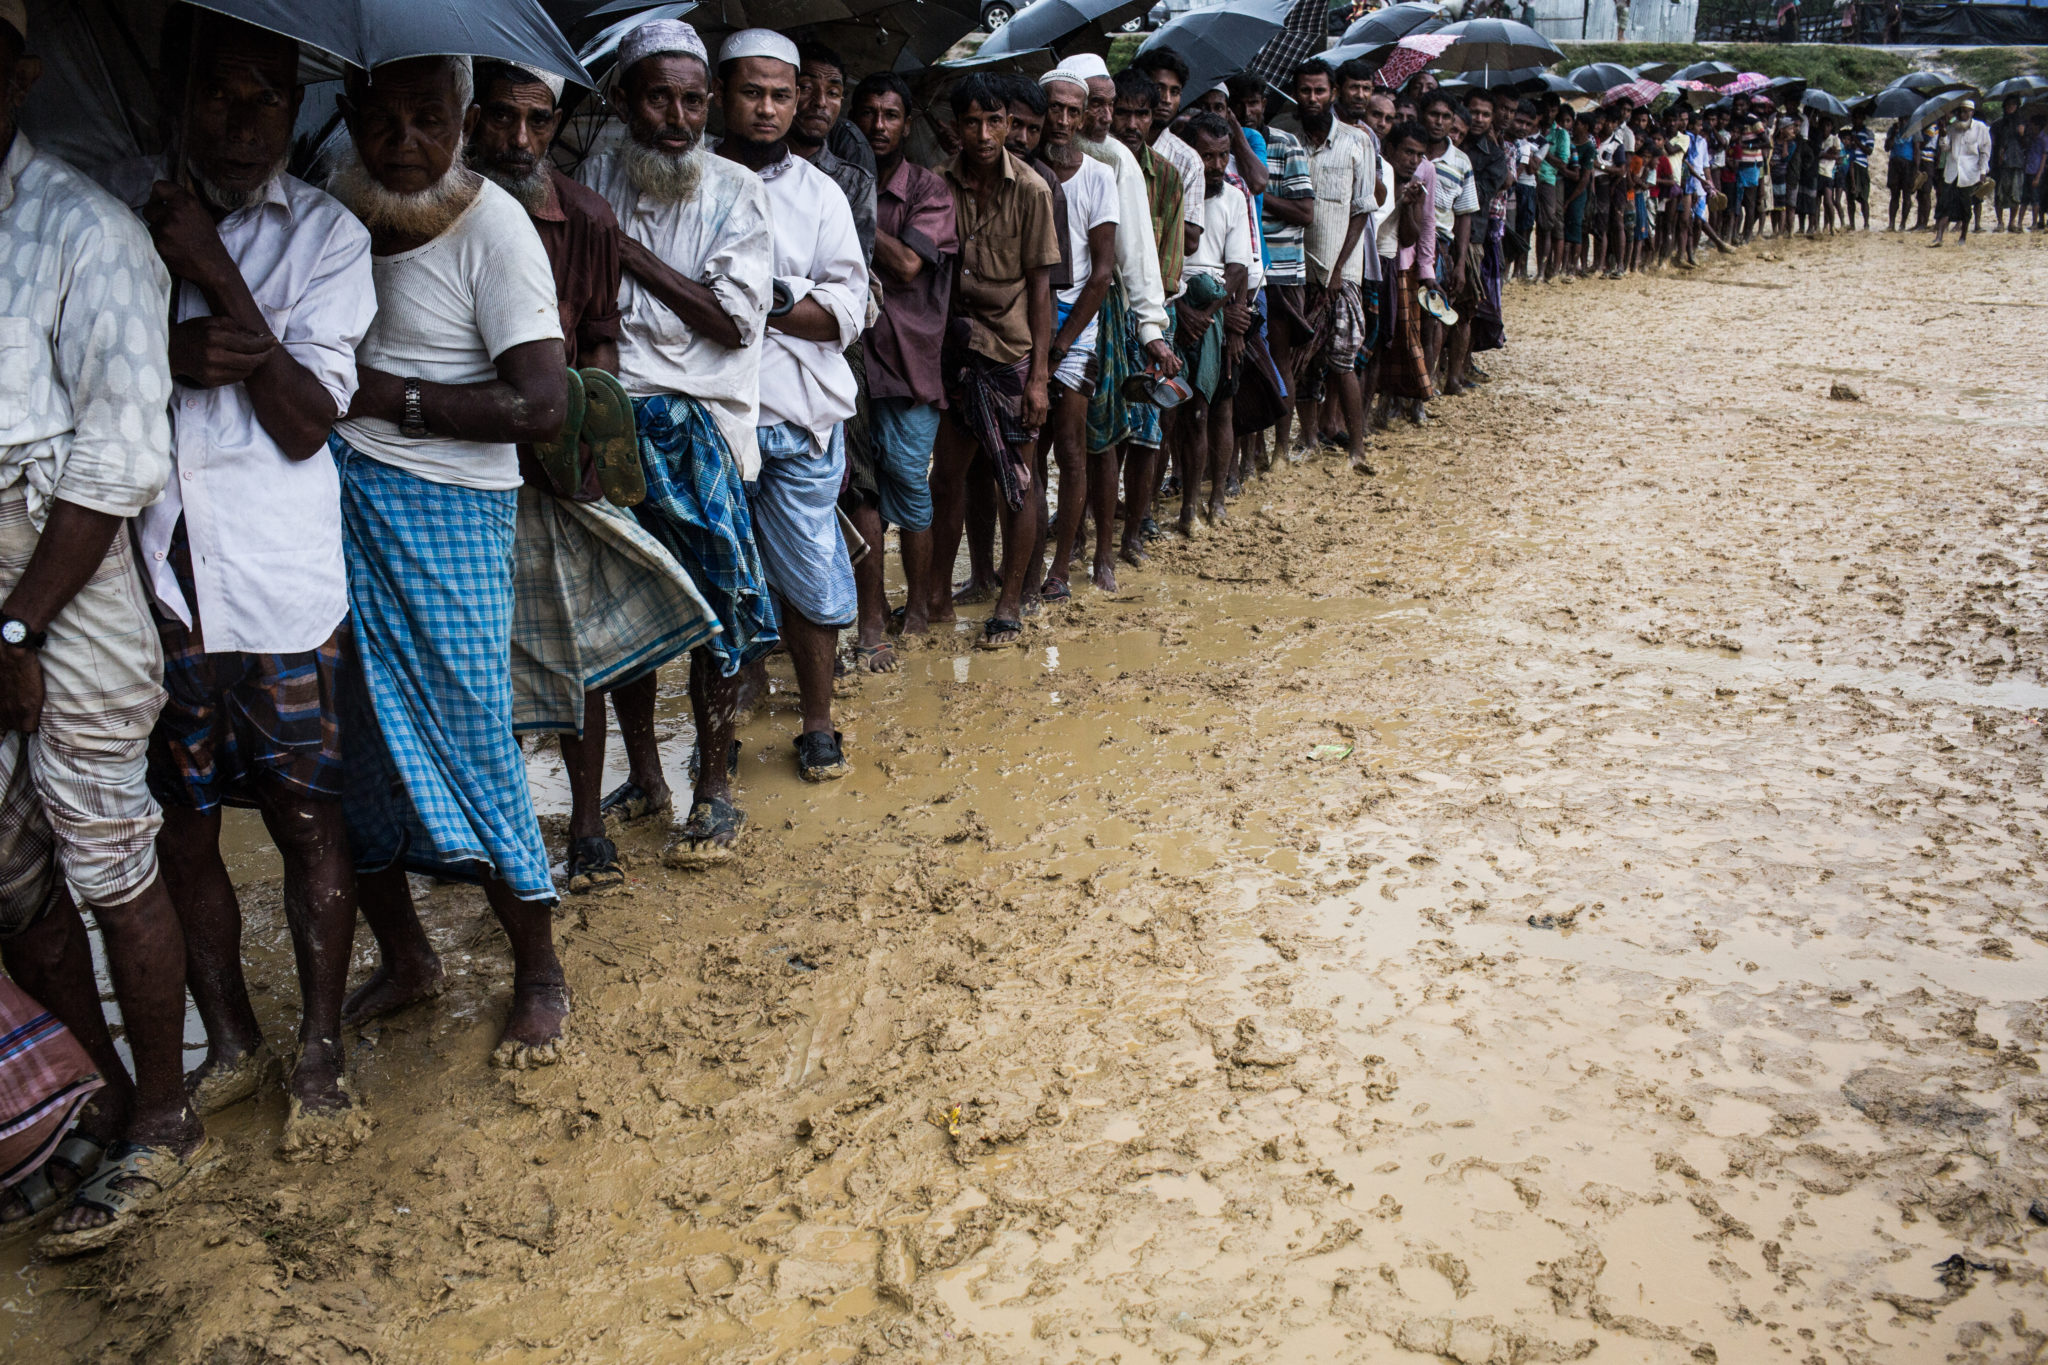 Bangladesh/Myanmar: Postponing returns arrangement provides temporary relief for Rohingya refugees